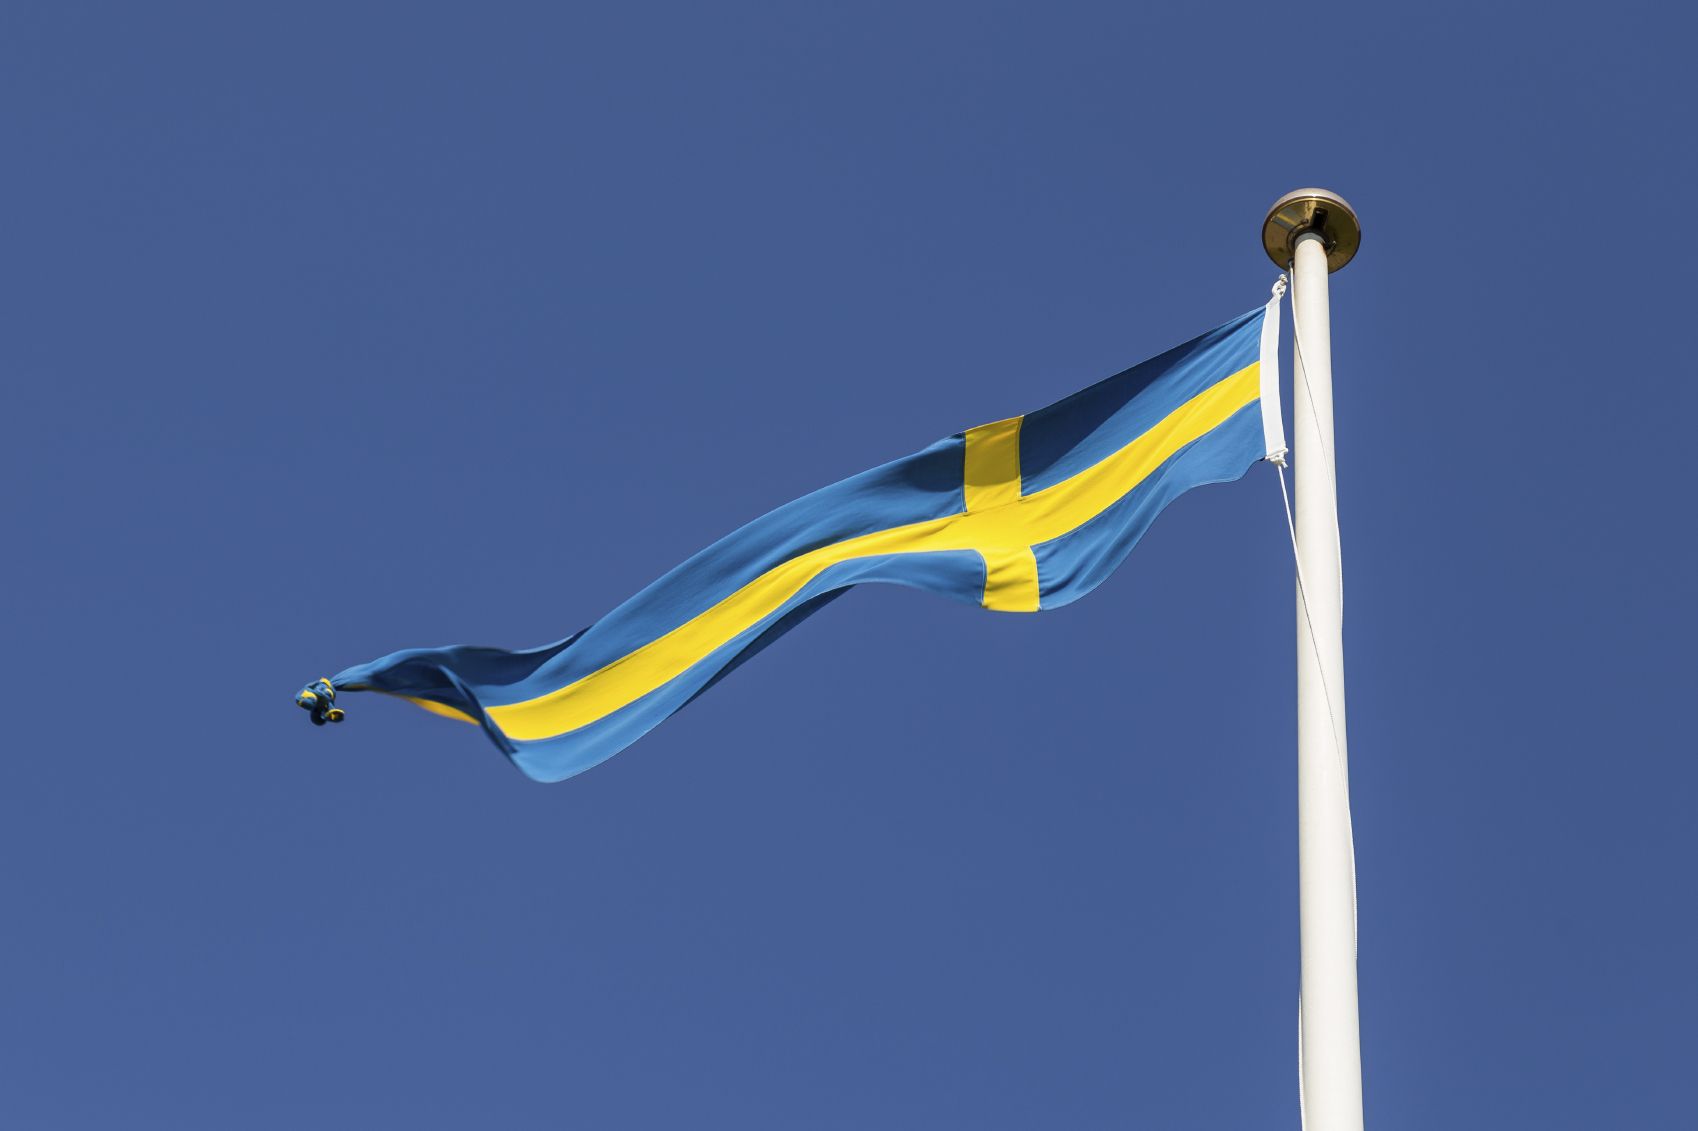 Svenska flaggan i flaggstång mot blå himmel{:}{:en}Flagpole with Swedish flag against a blue sky{:}